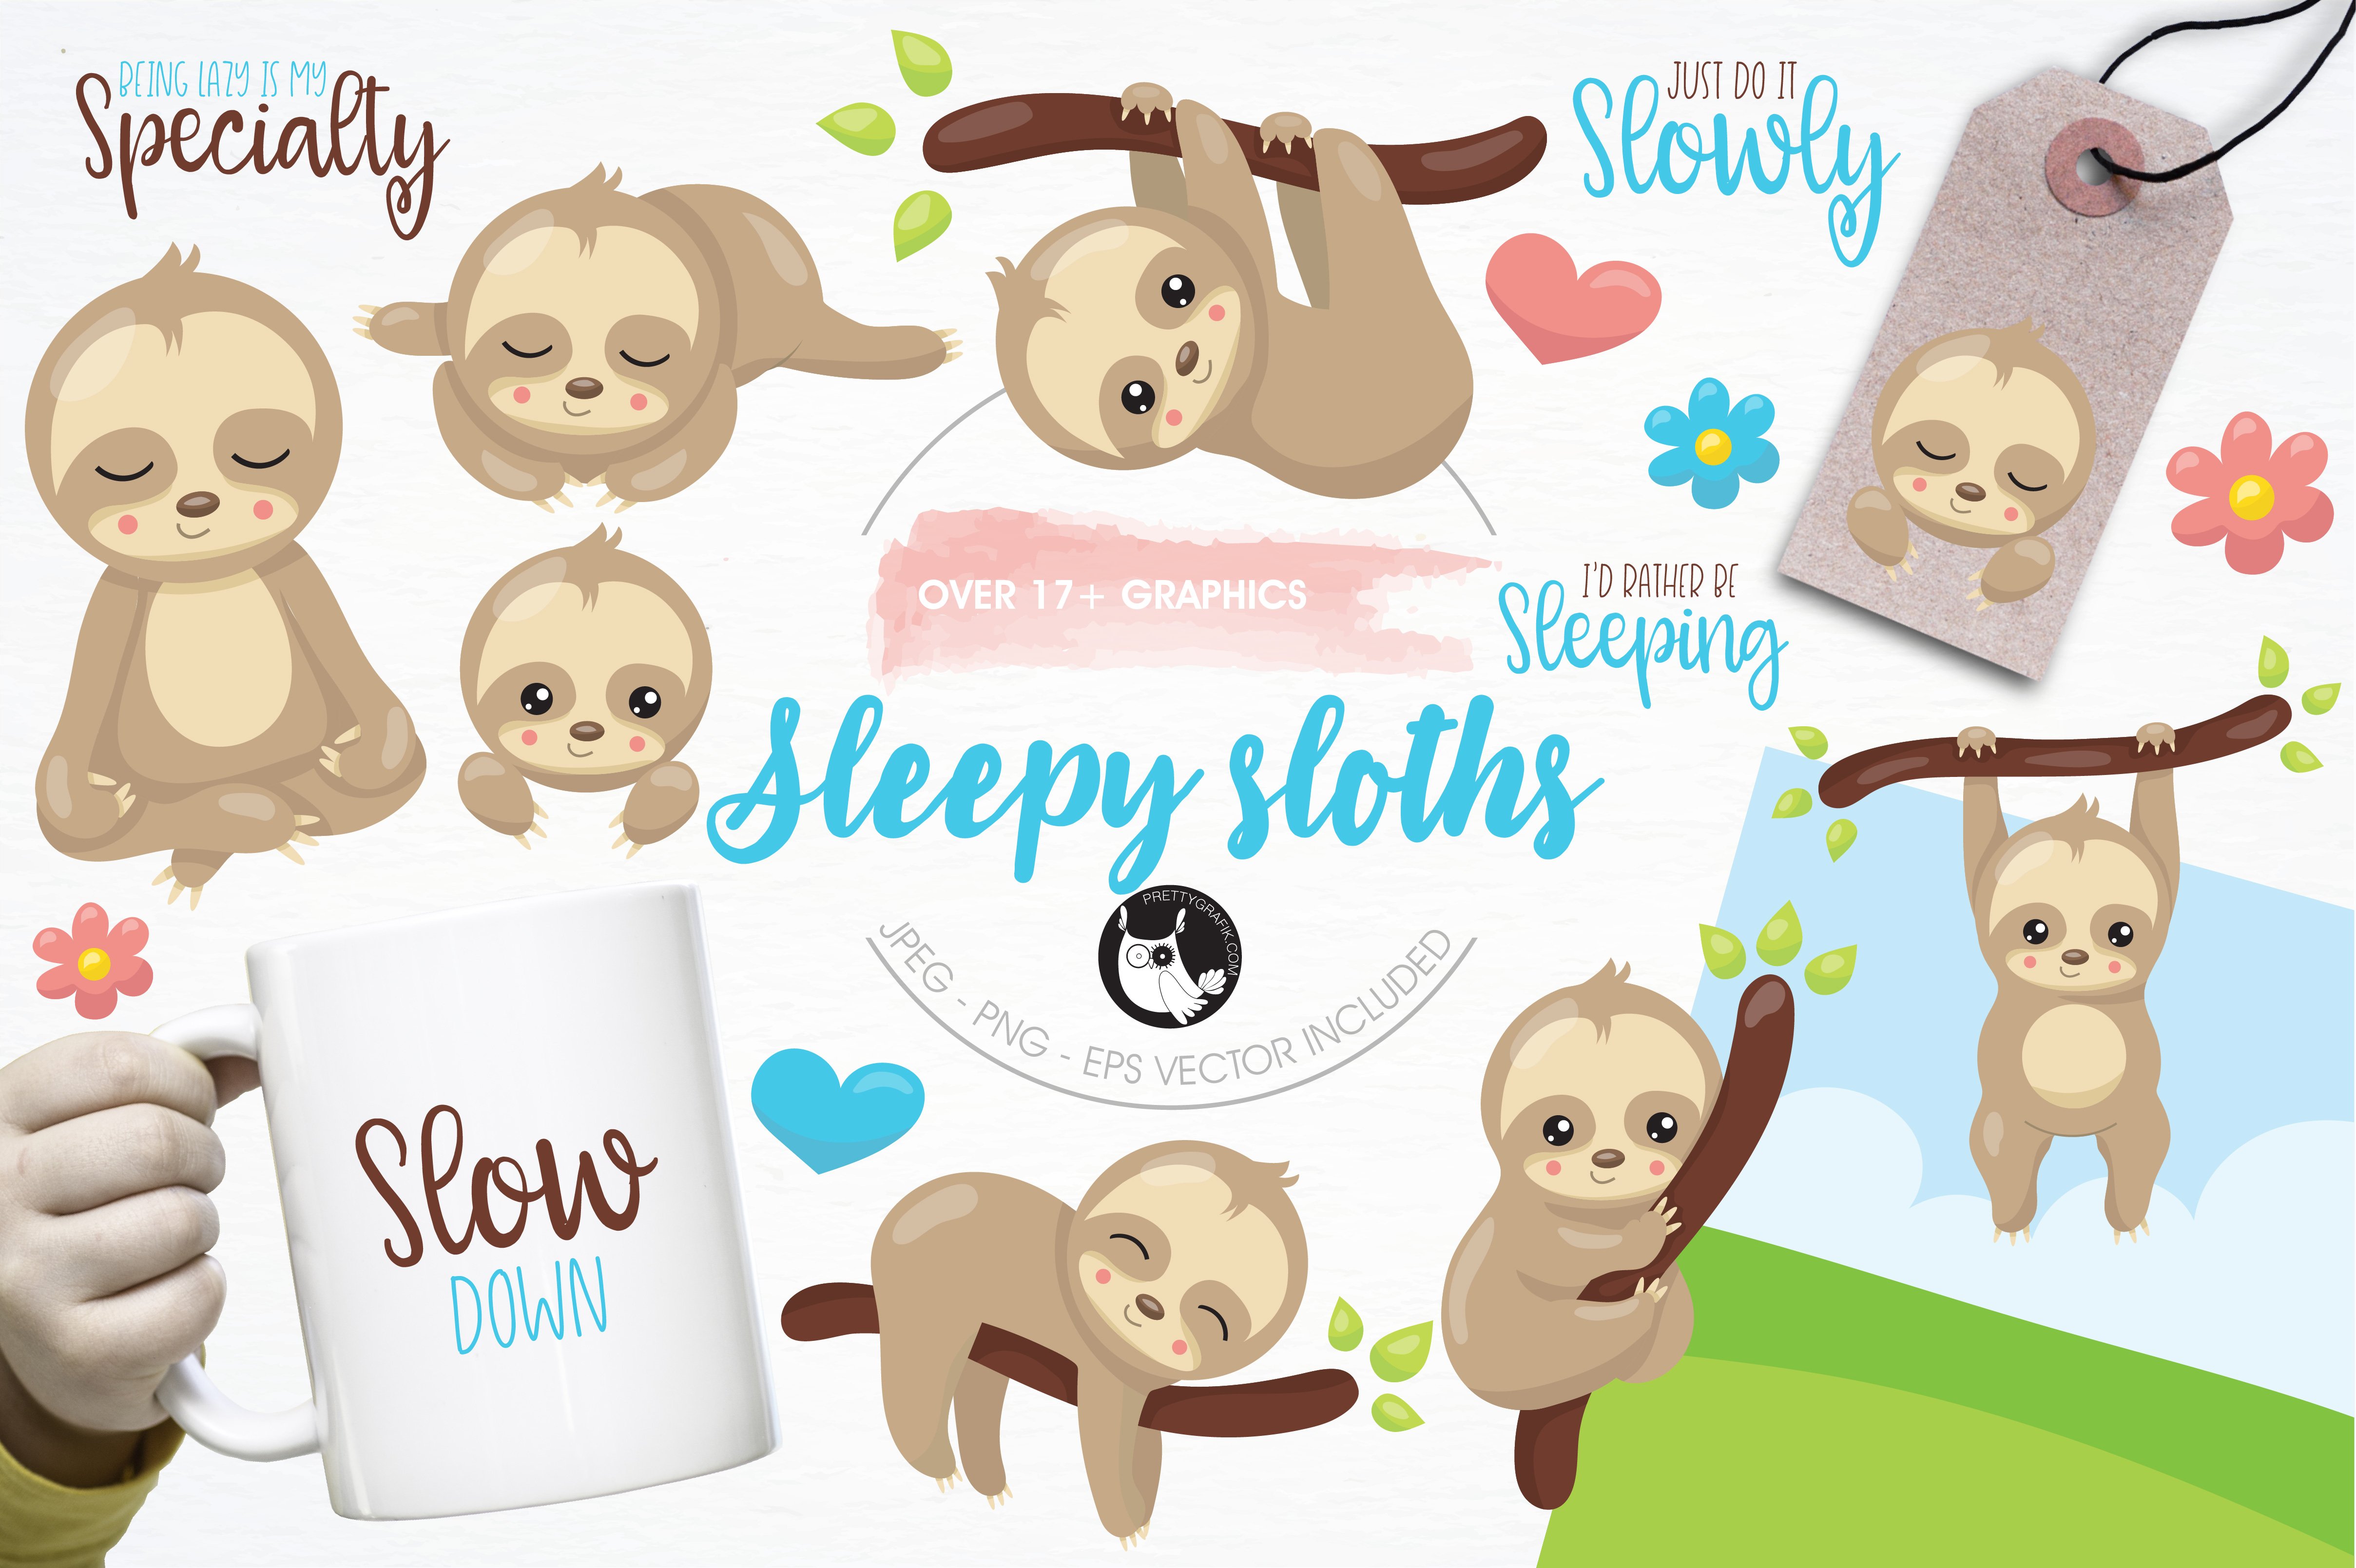 Sleepy sloth illustration pack - Vector Image